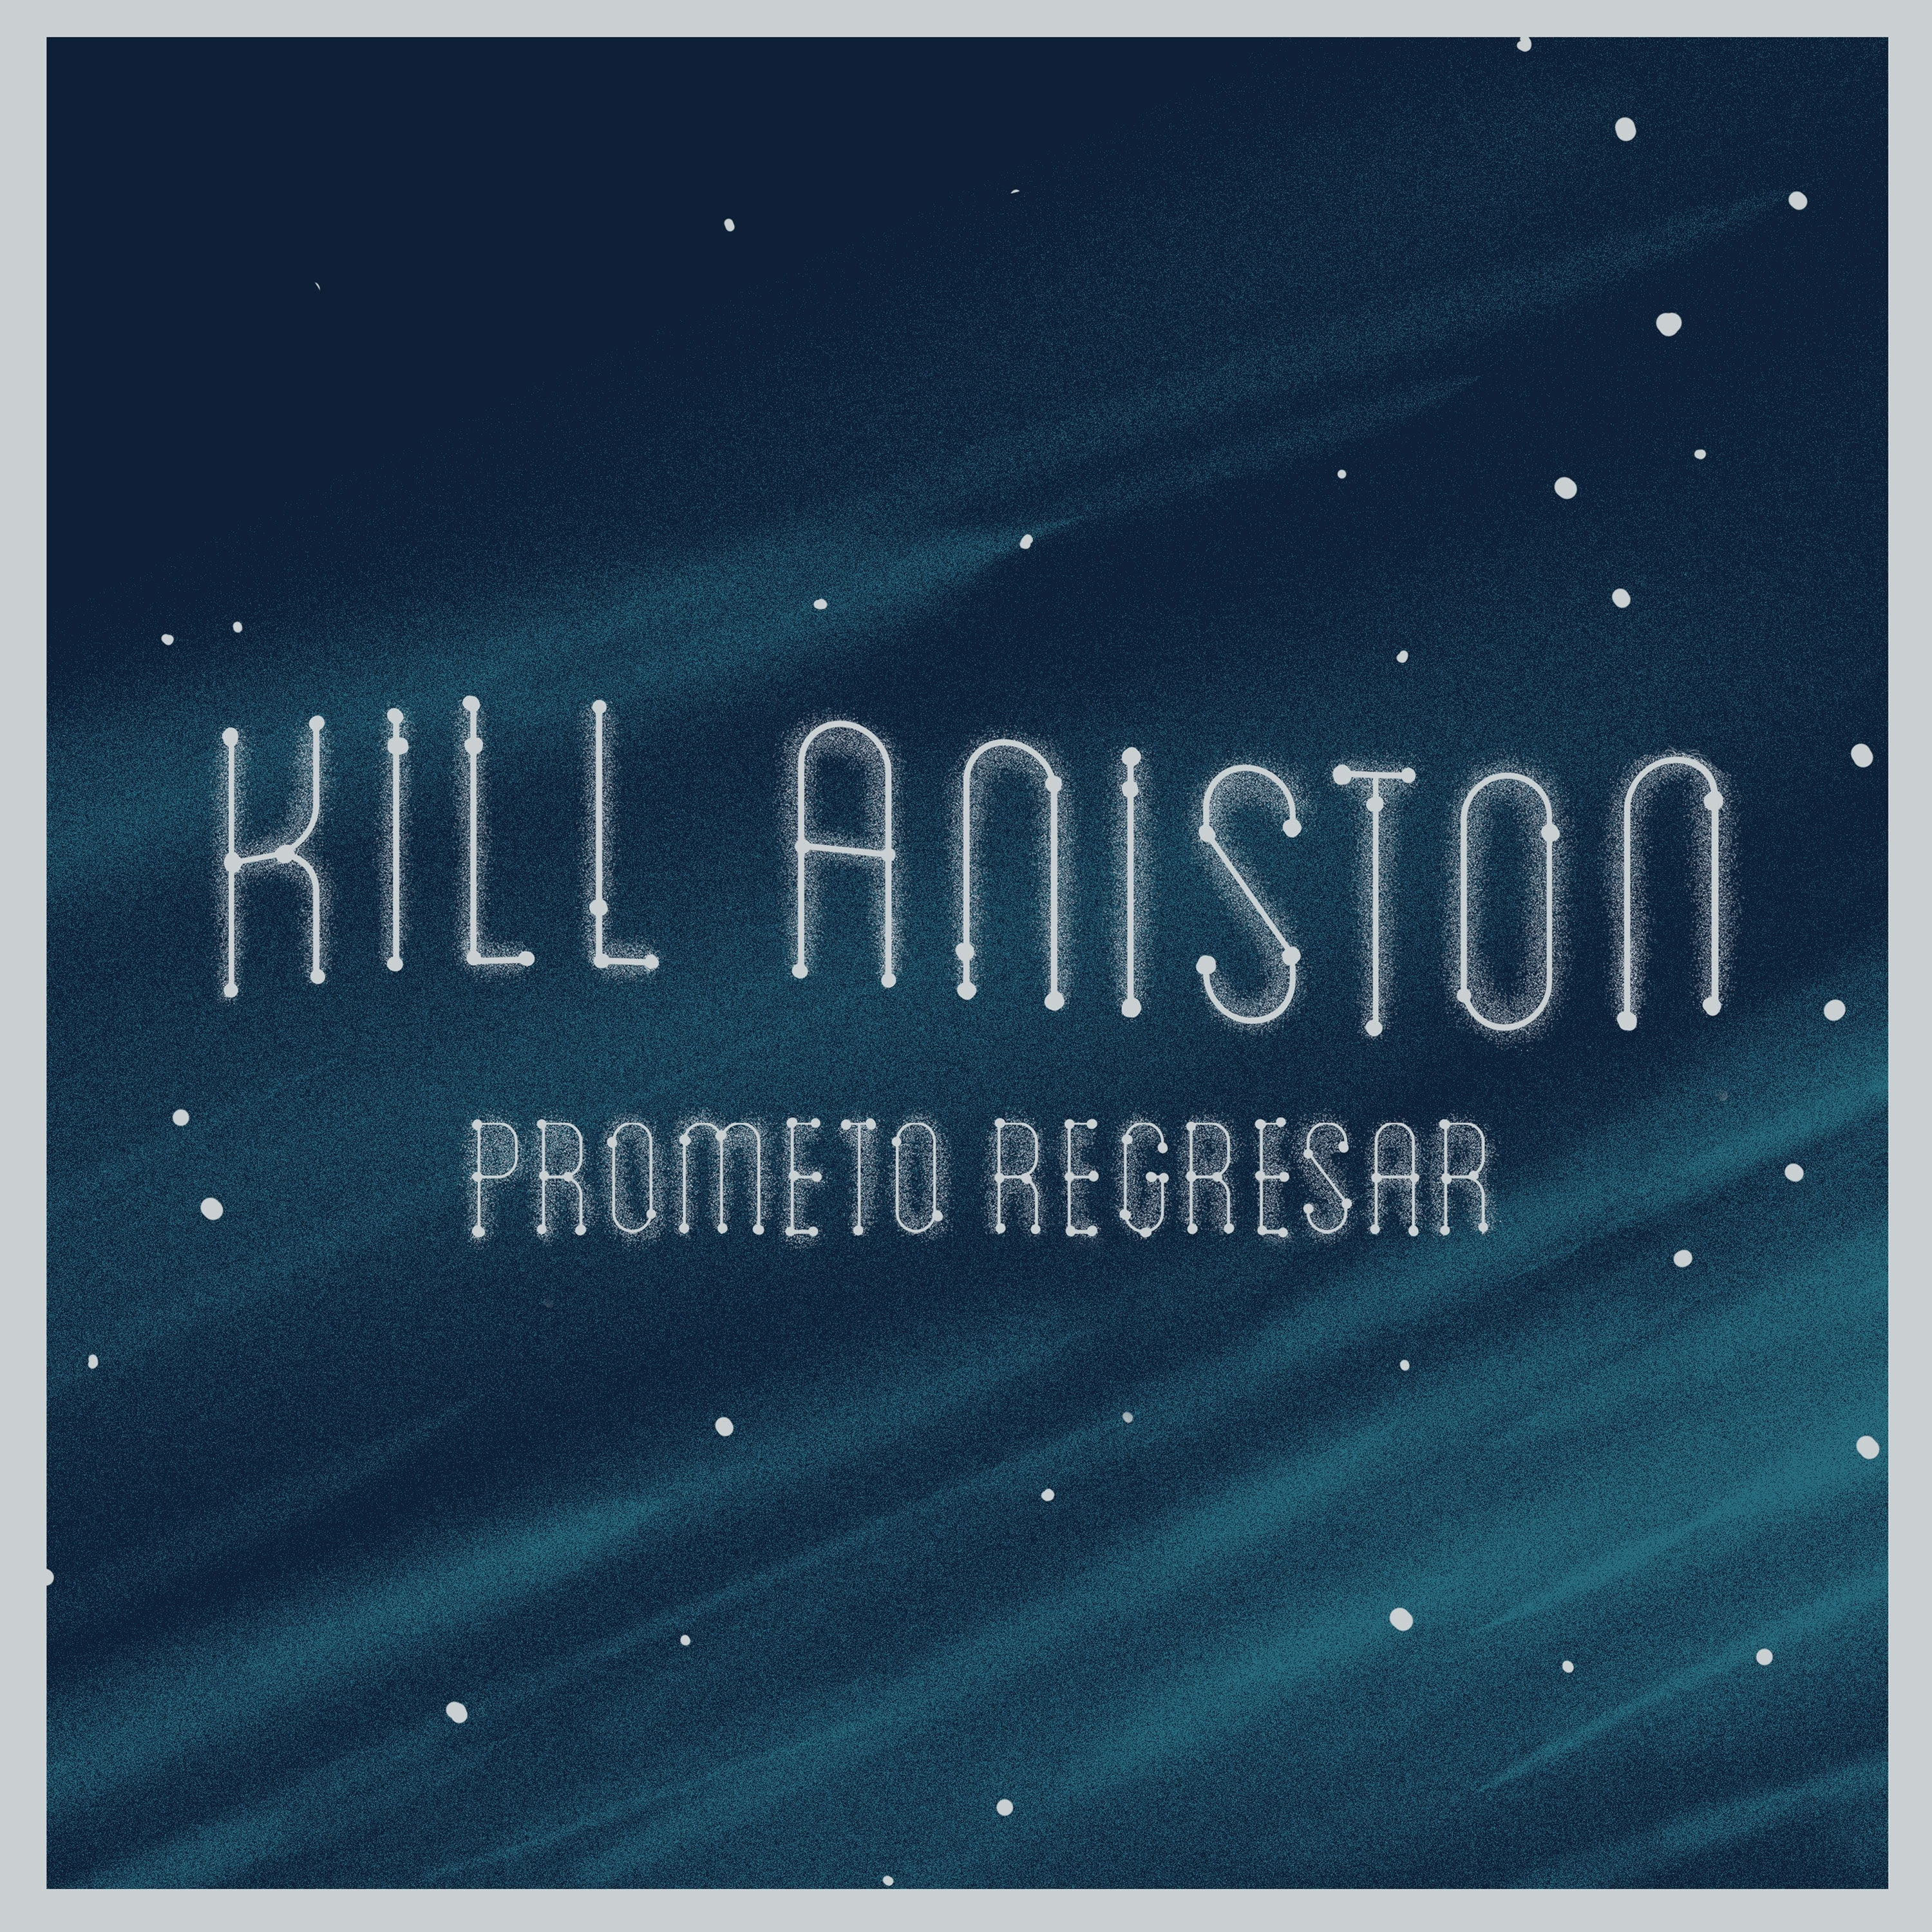 PrometoRegresar_KillAniston_2021